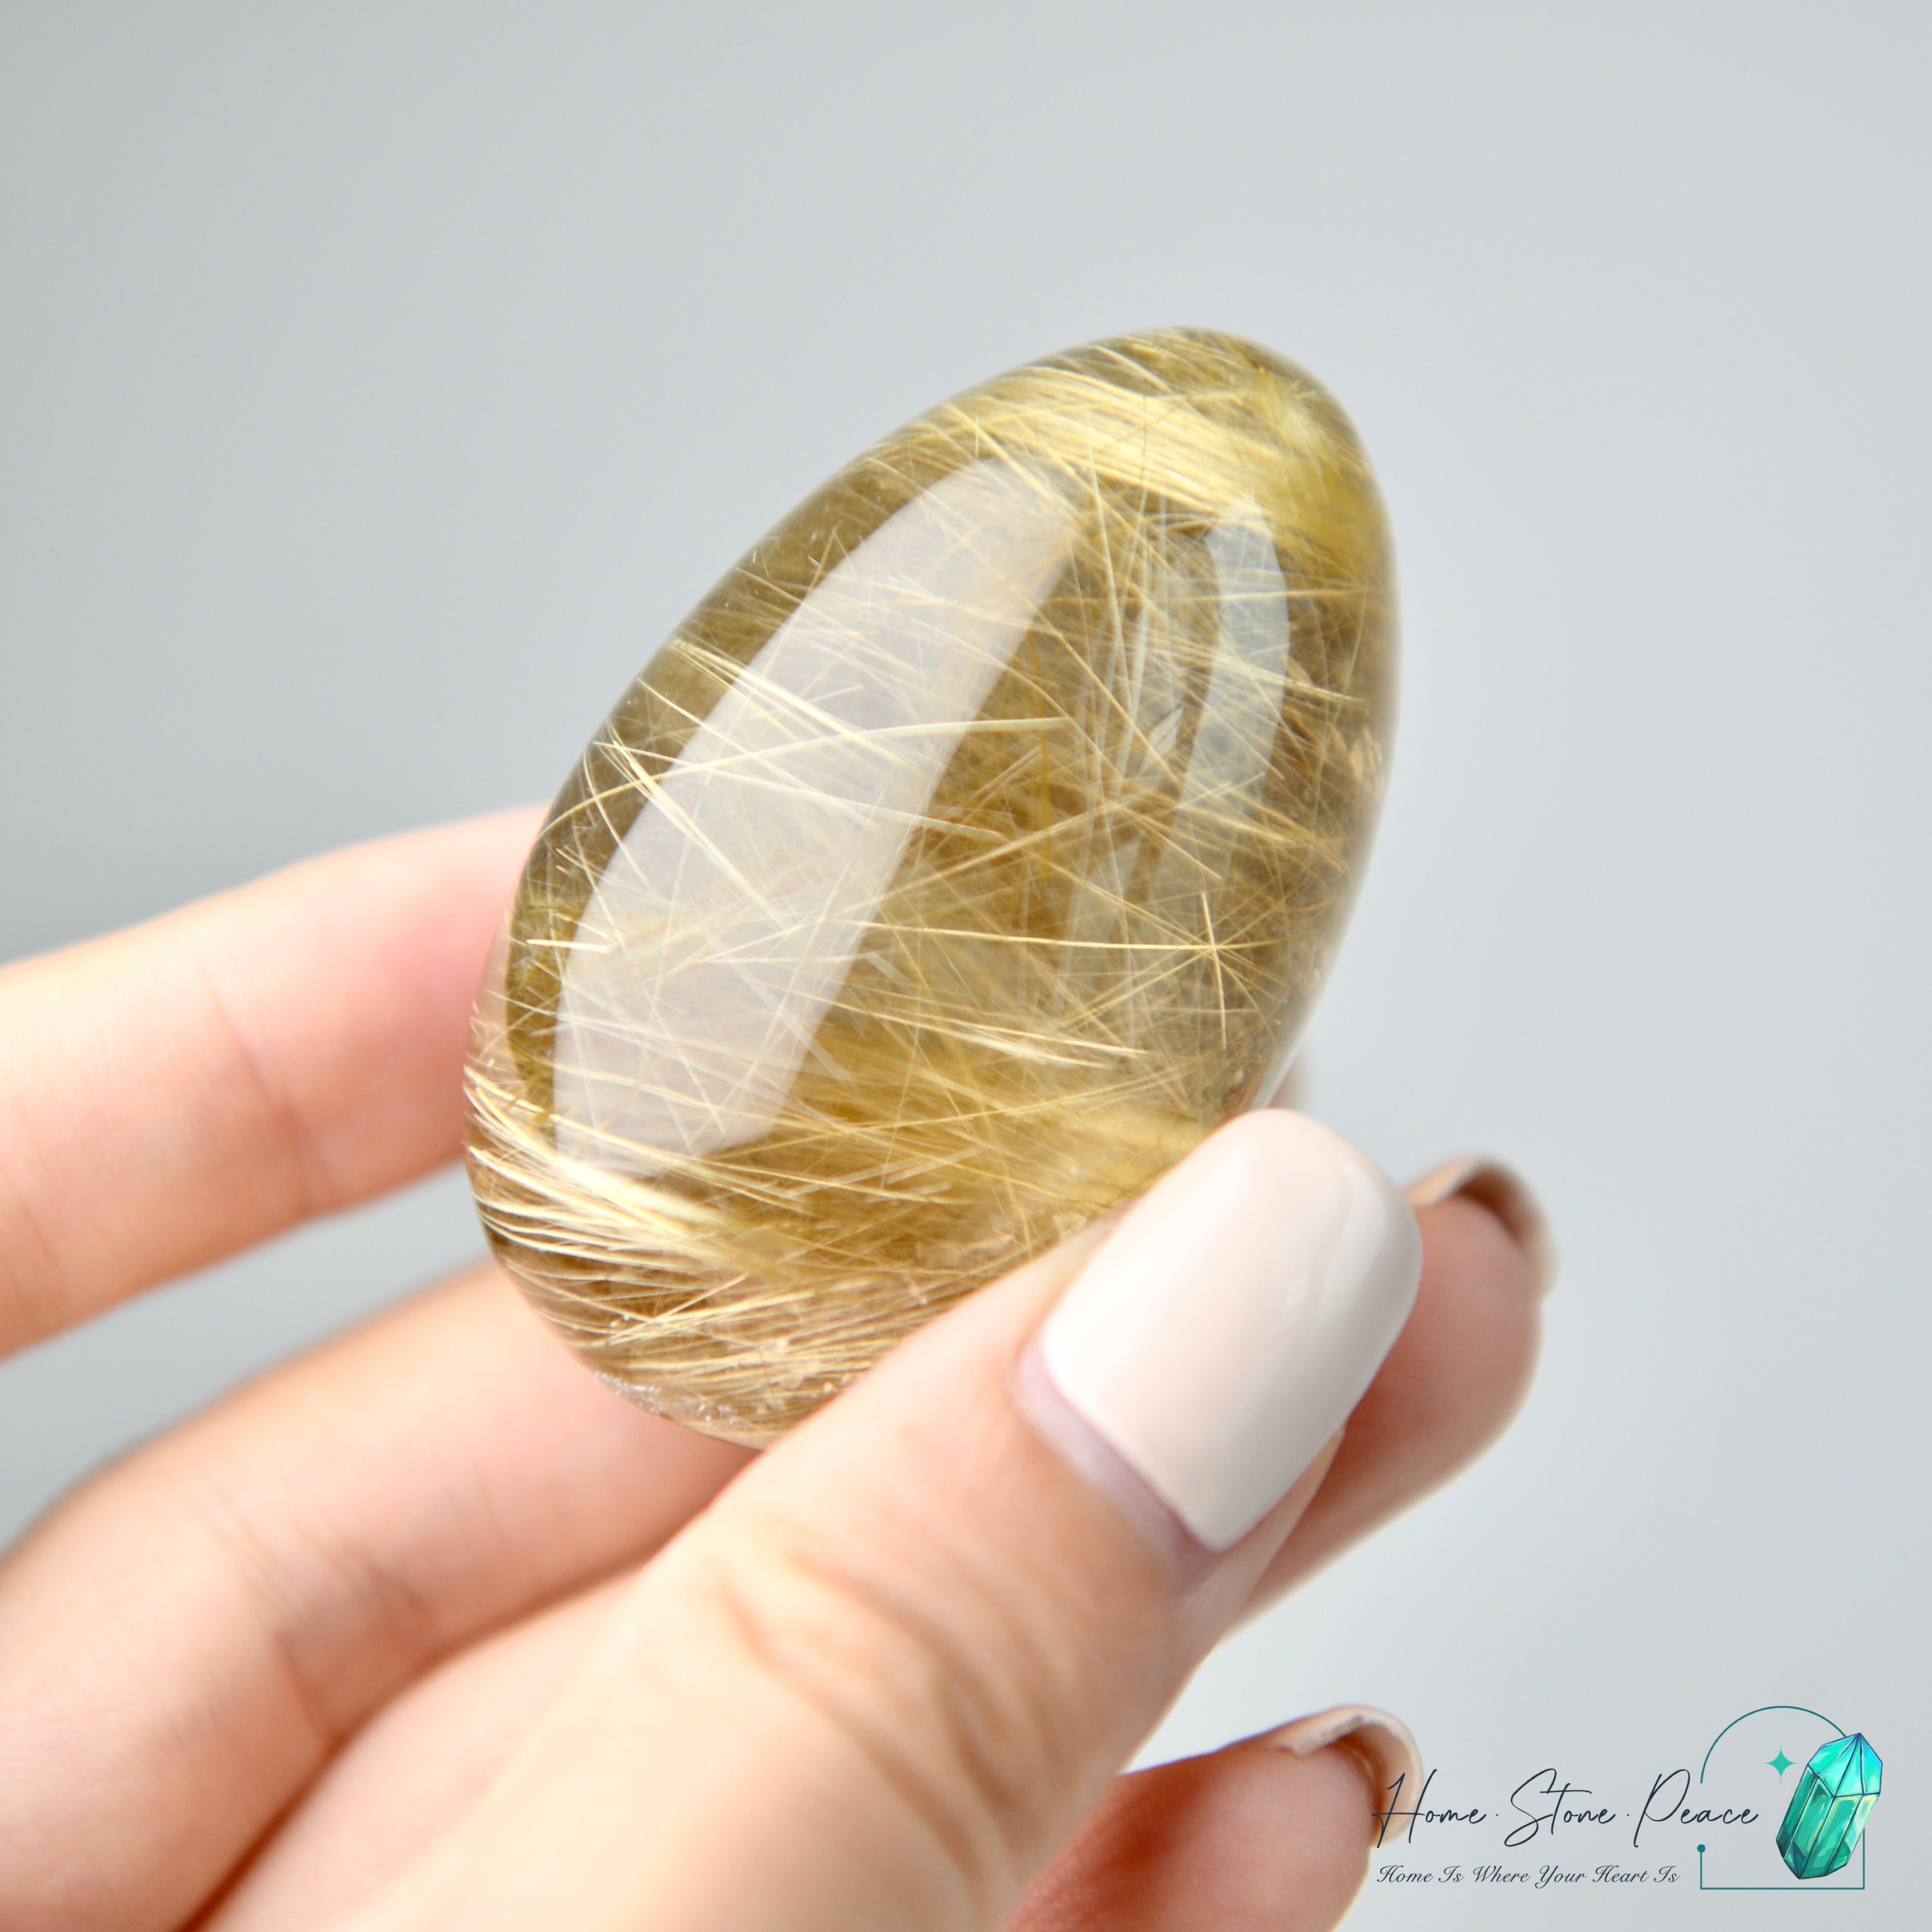 Premium Brazilian Gold Rutilated Egg 巴西金髮晶蛋